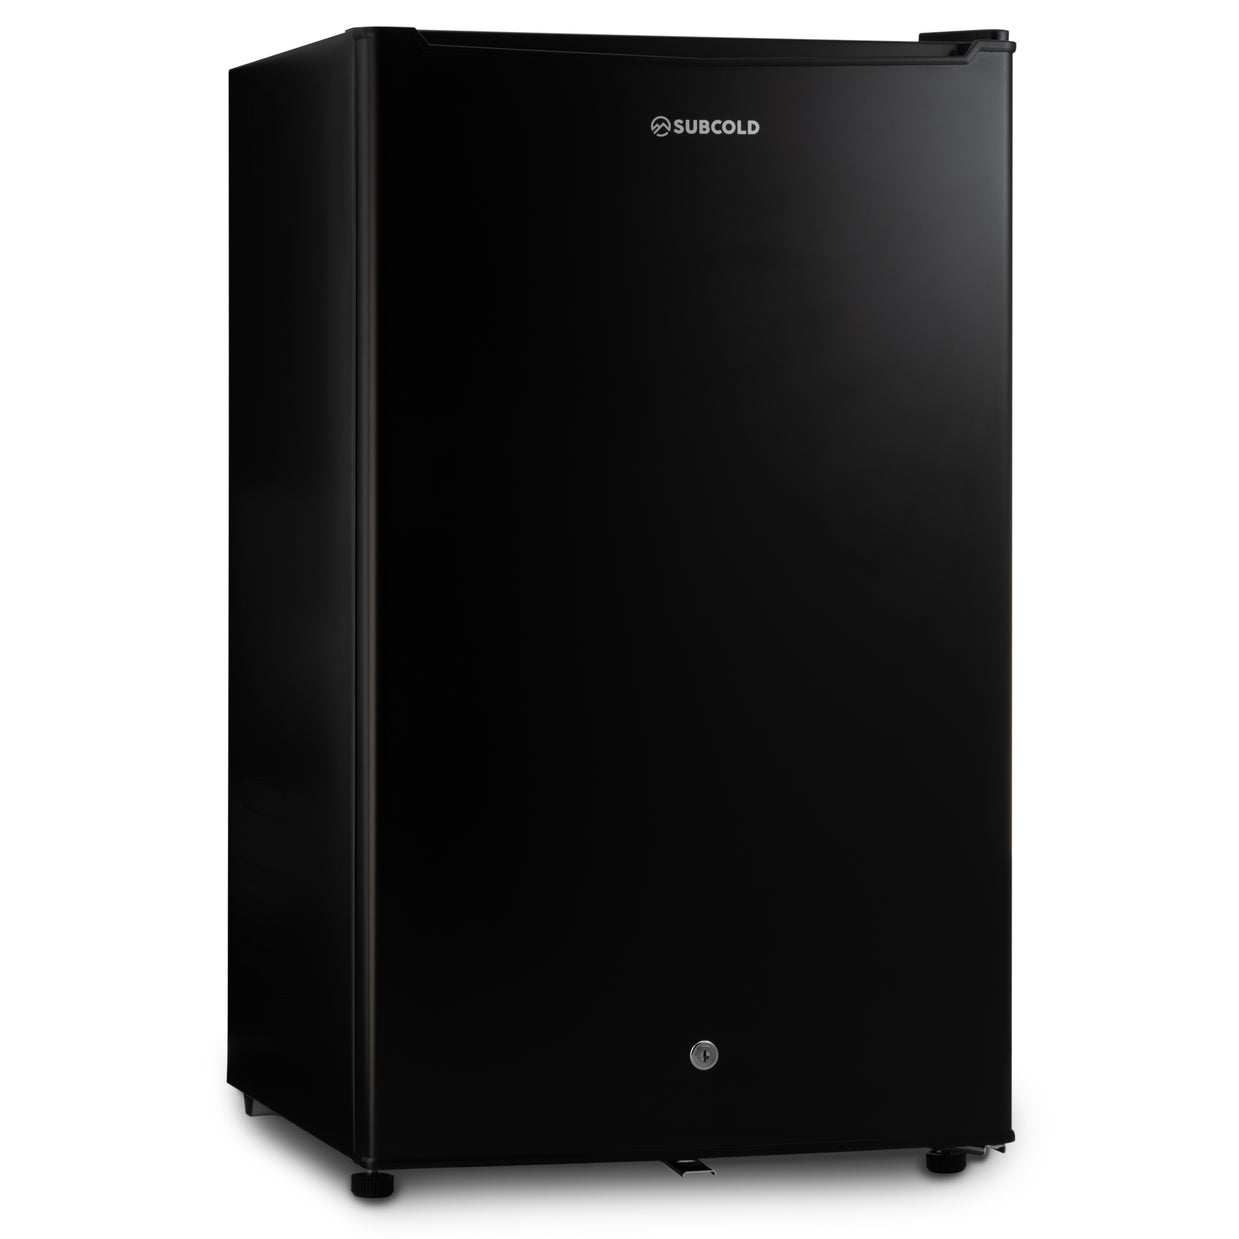 Nexel BC-47 Compact Countertop Refrigerator 1.7 Cu. ft. Black